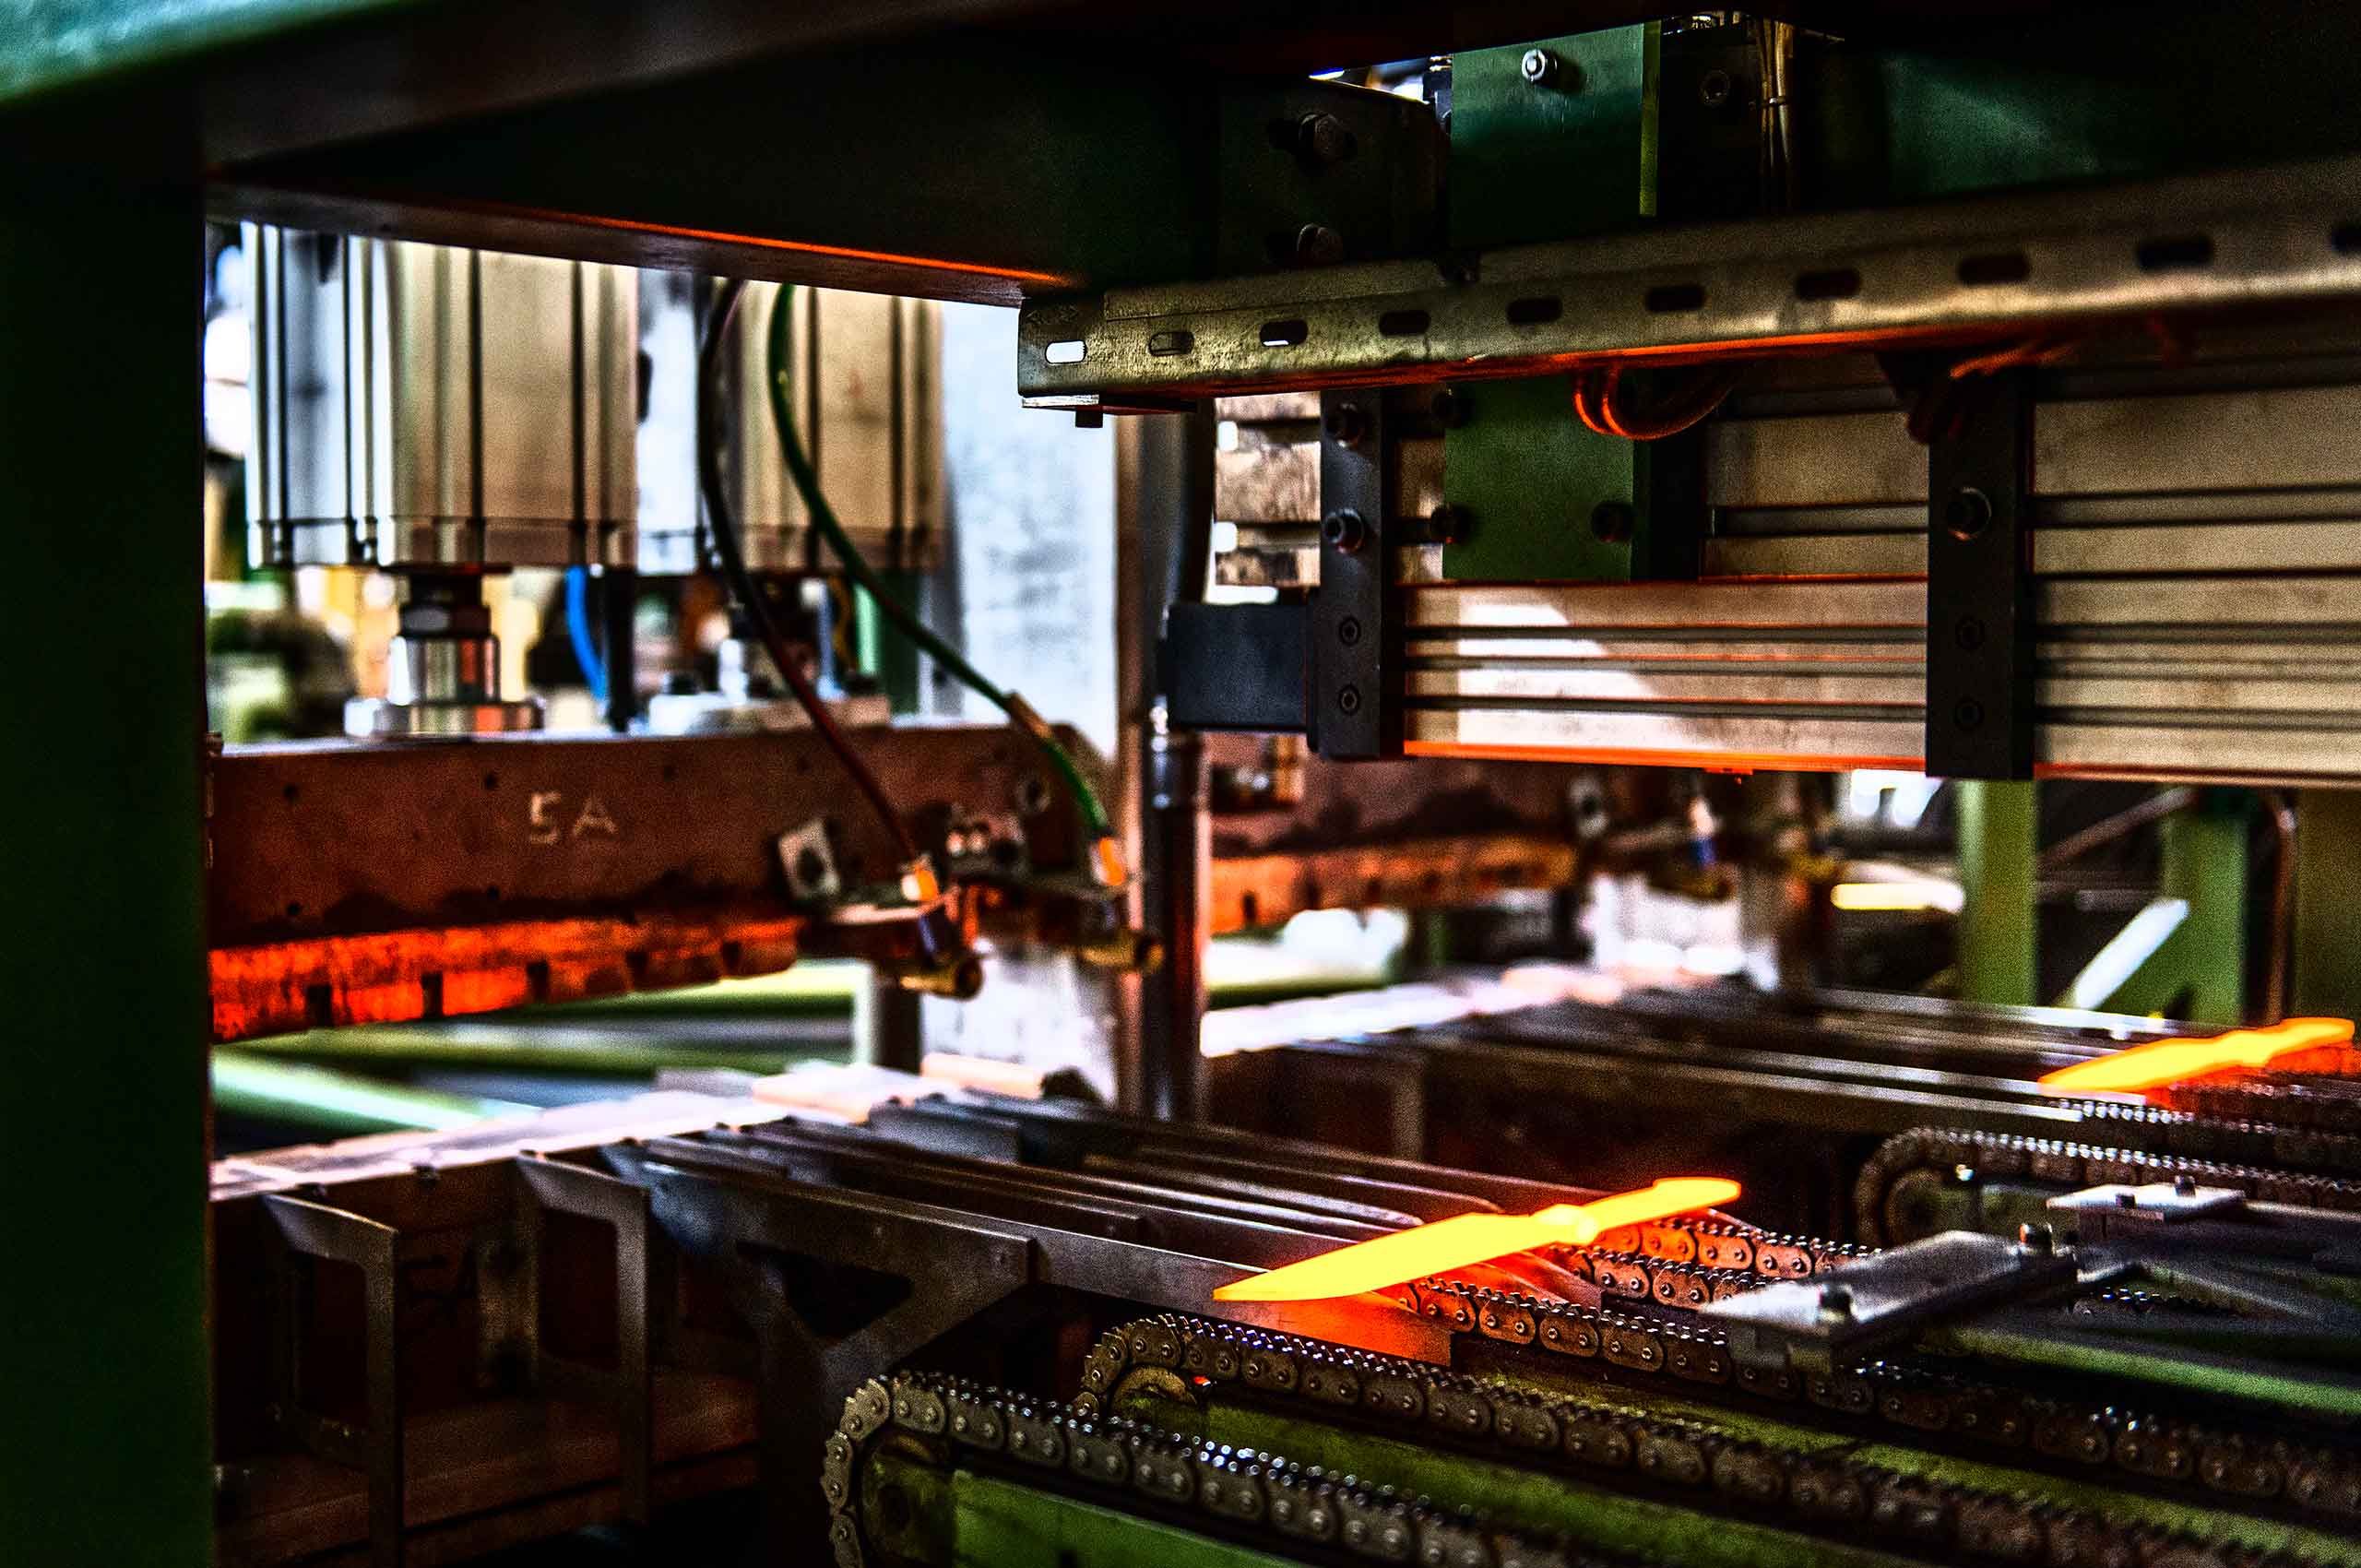 the-oven-wustof-factory-solingen-germany-by-HenrikOlundPhotography.jpg